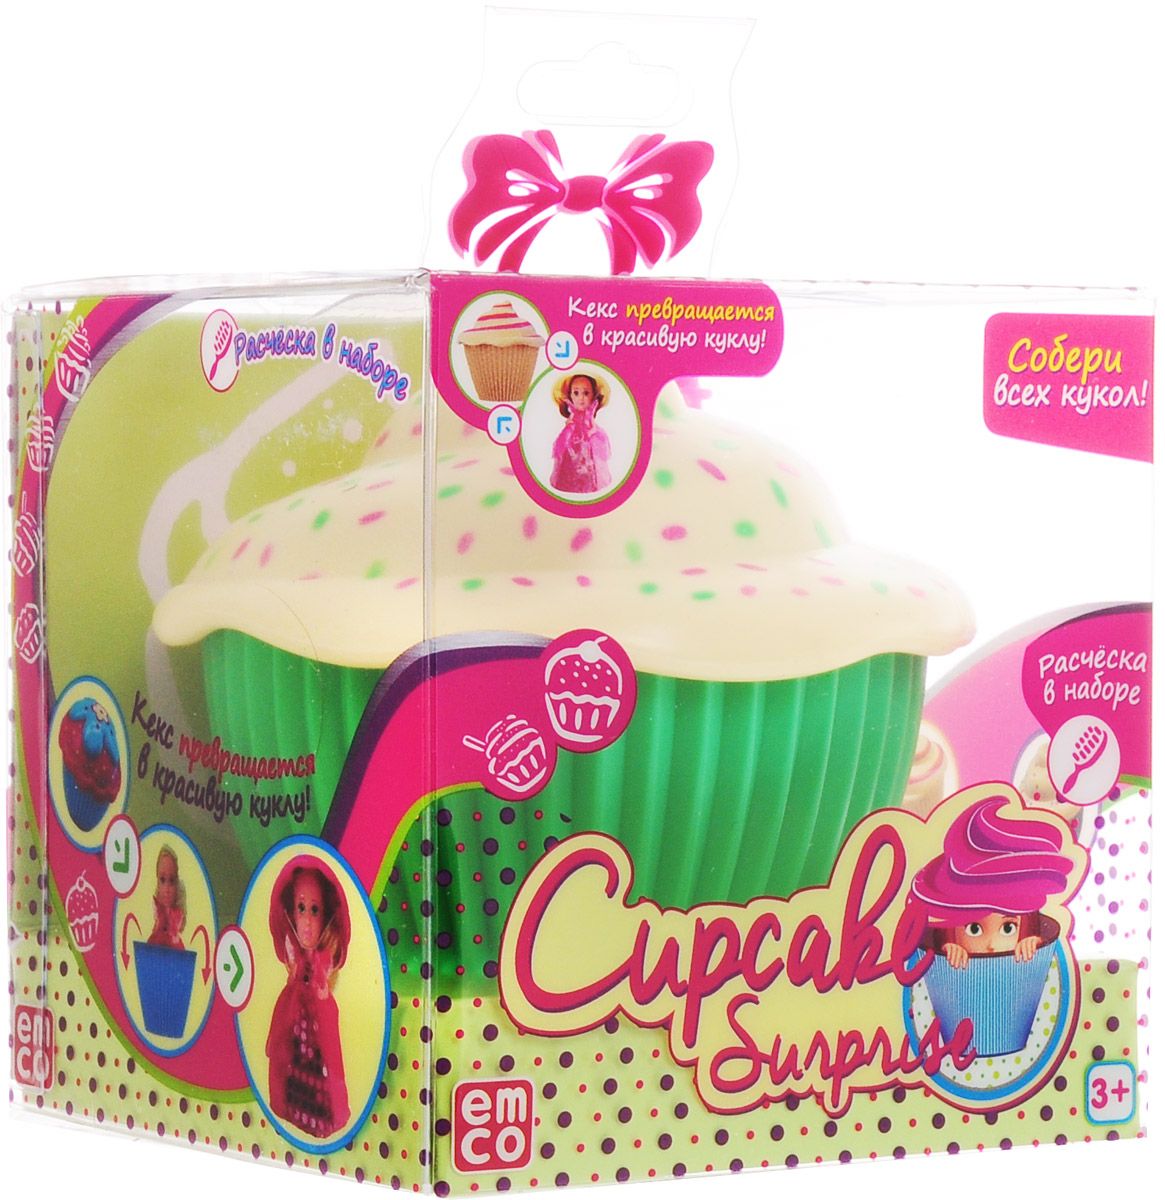 Emco - Cupcake Surprise  